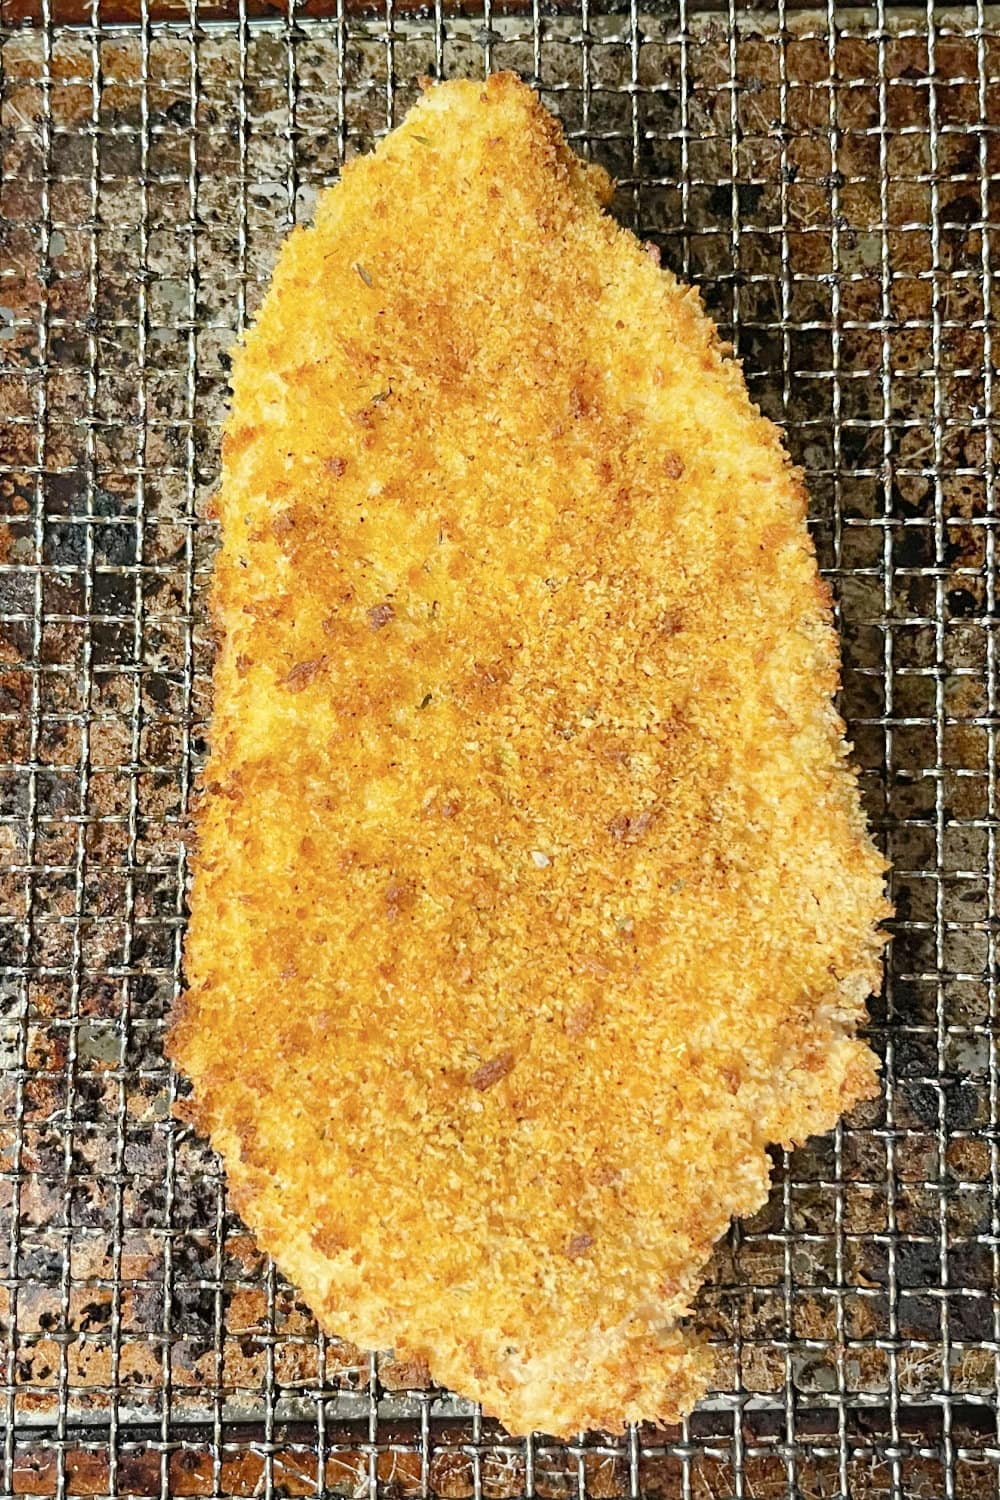 Crispy and golden brown chicken cutlet on an air fryer rack. 